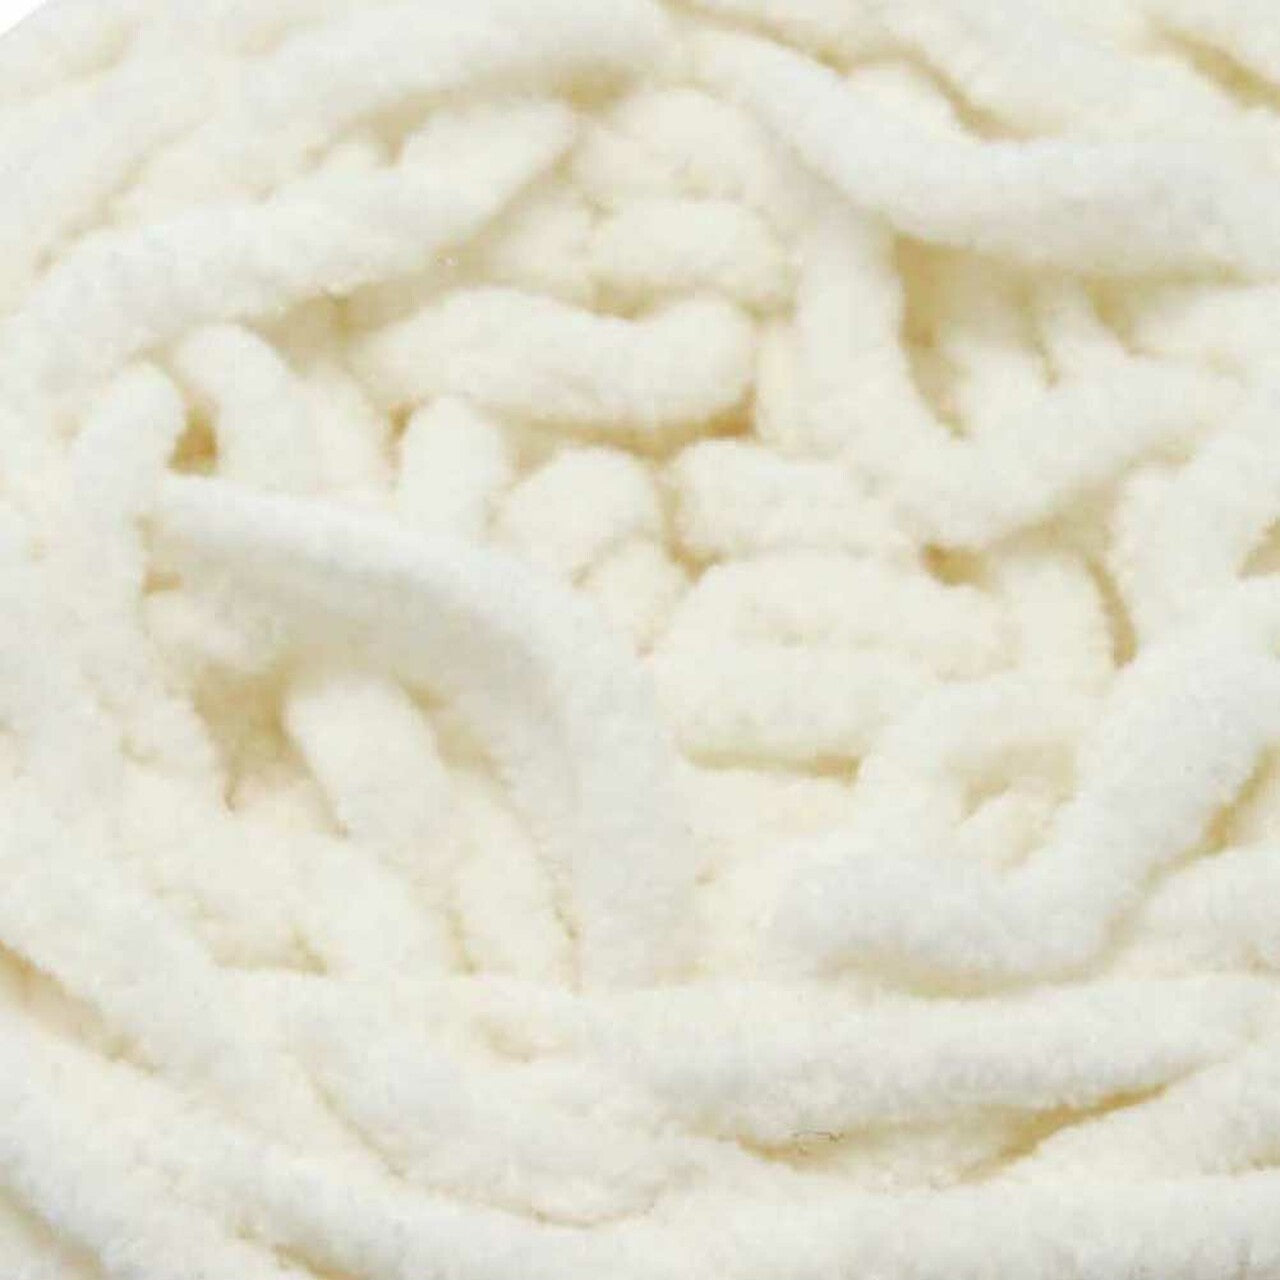 Chenille Blanket Yarn - Discount Craft